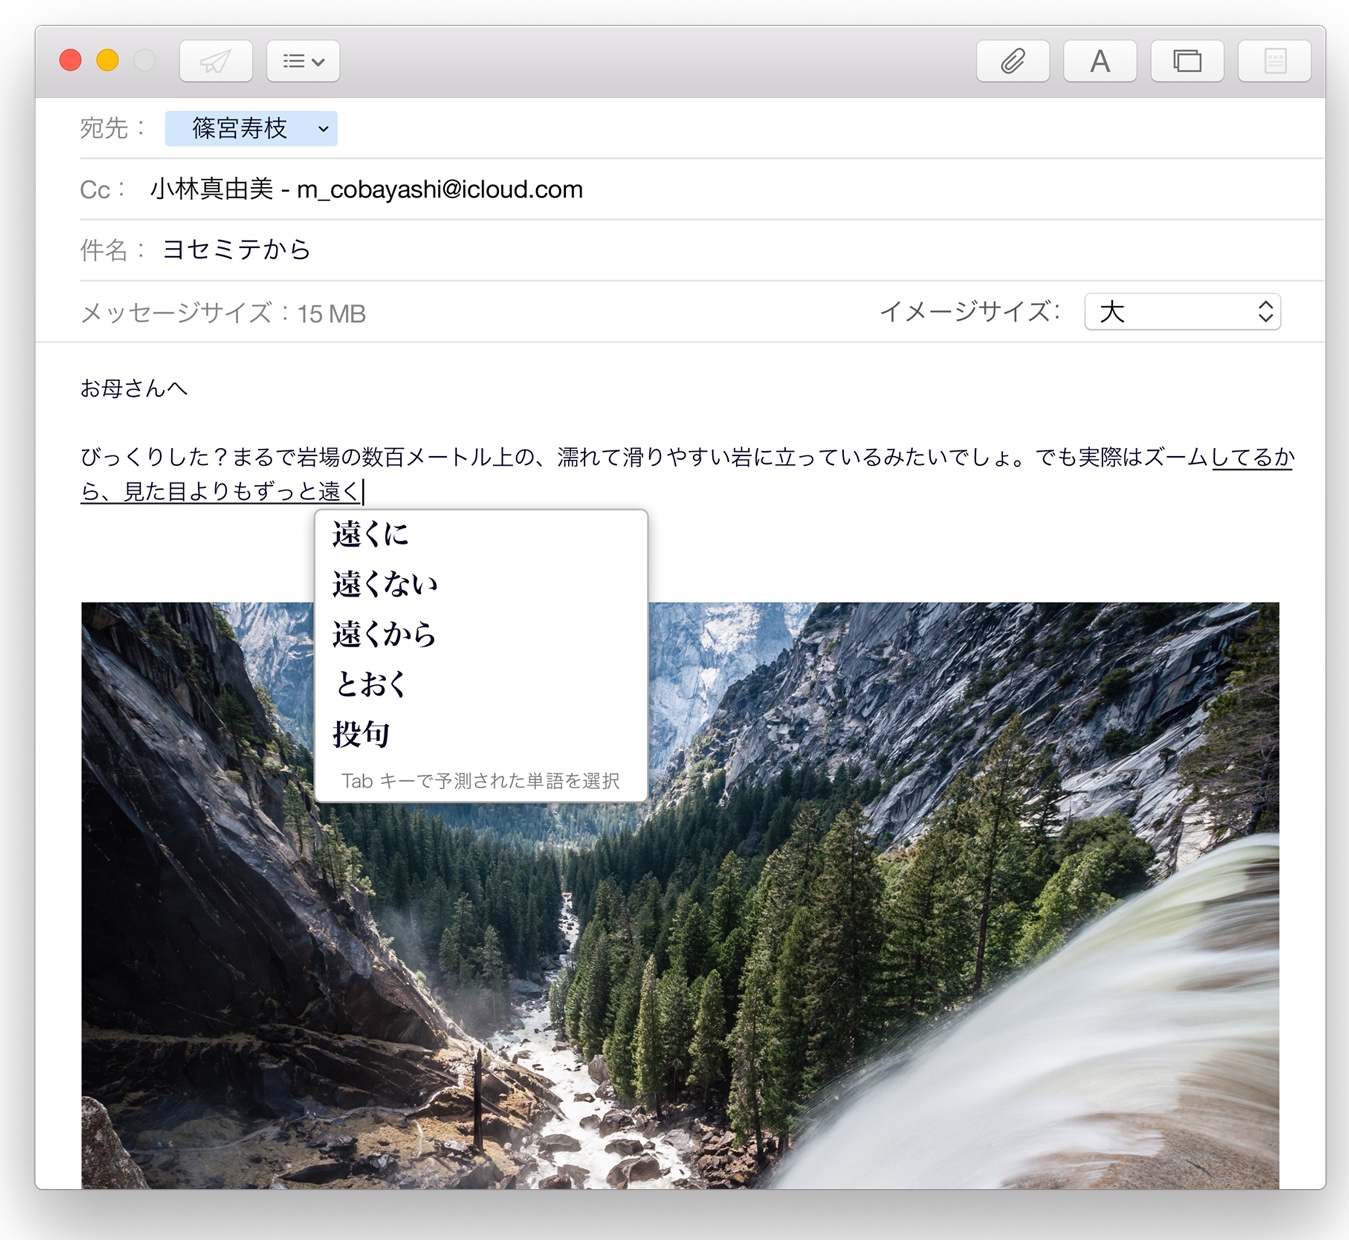 OS X El Capitan Japan international image 001